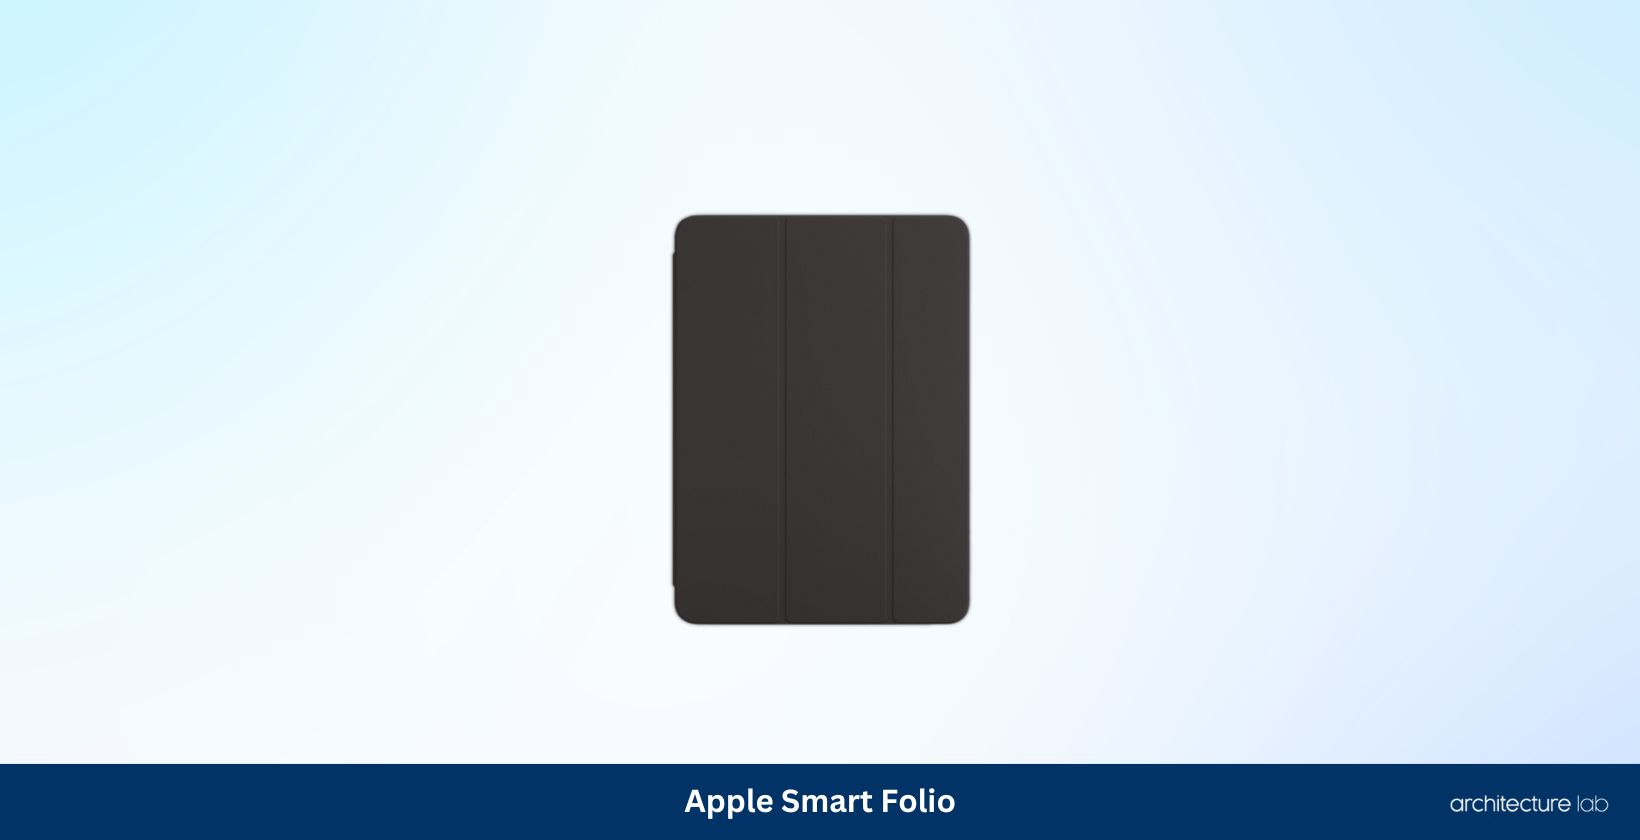 Apple smart folio